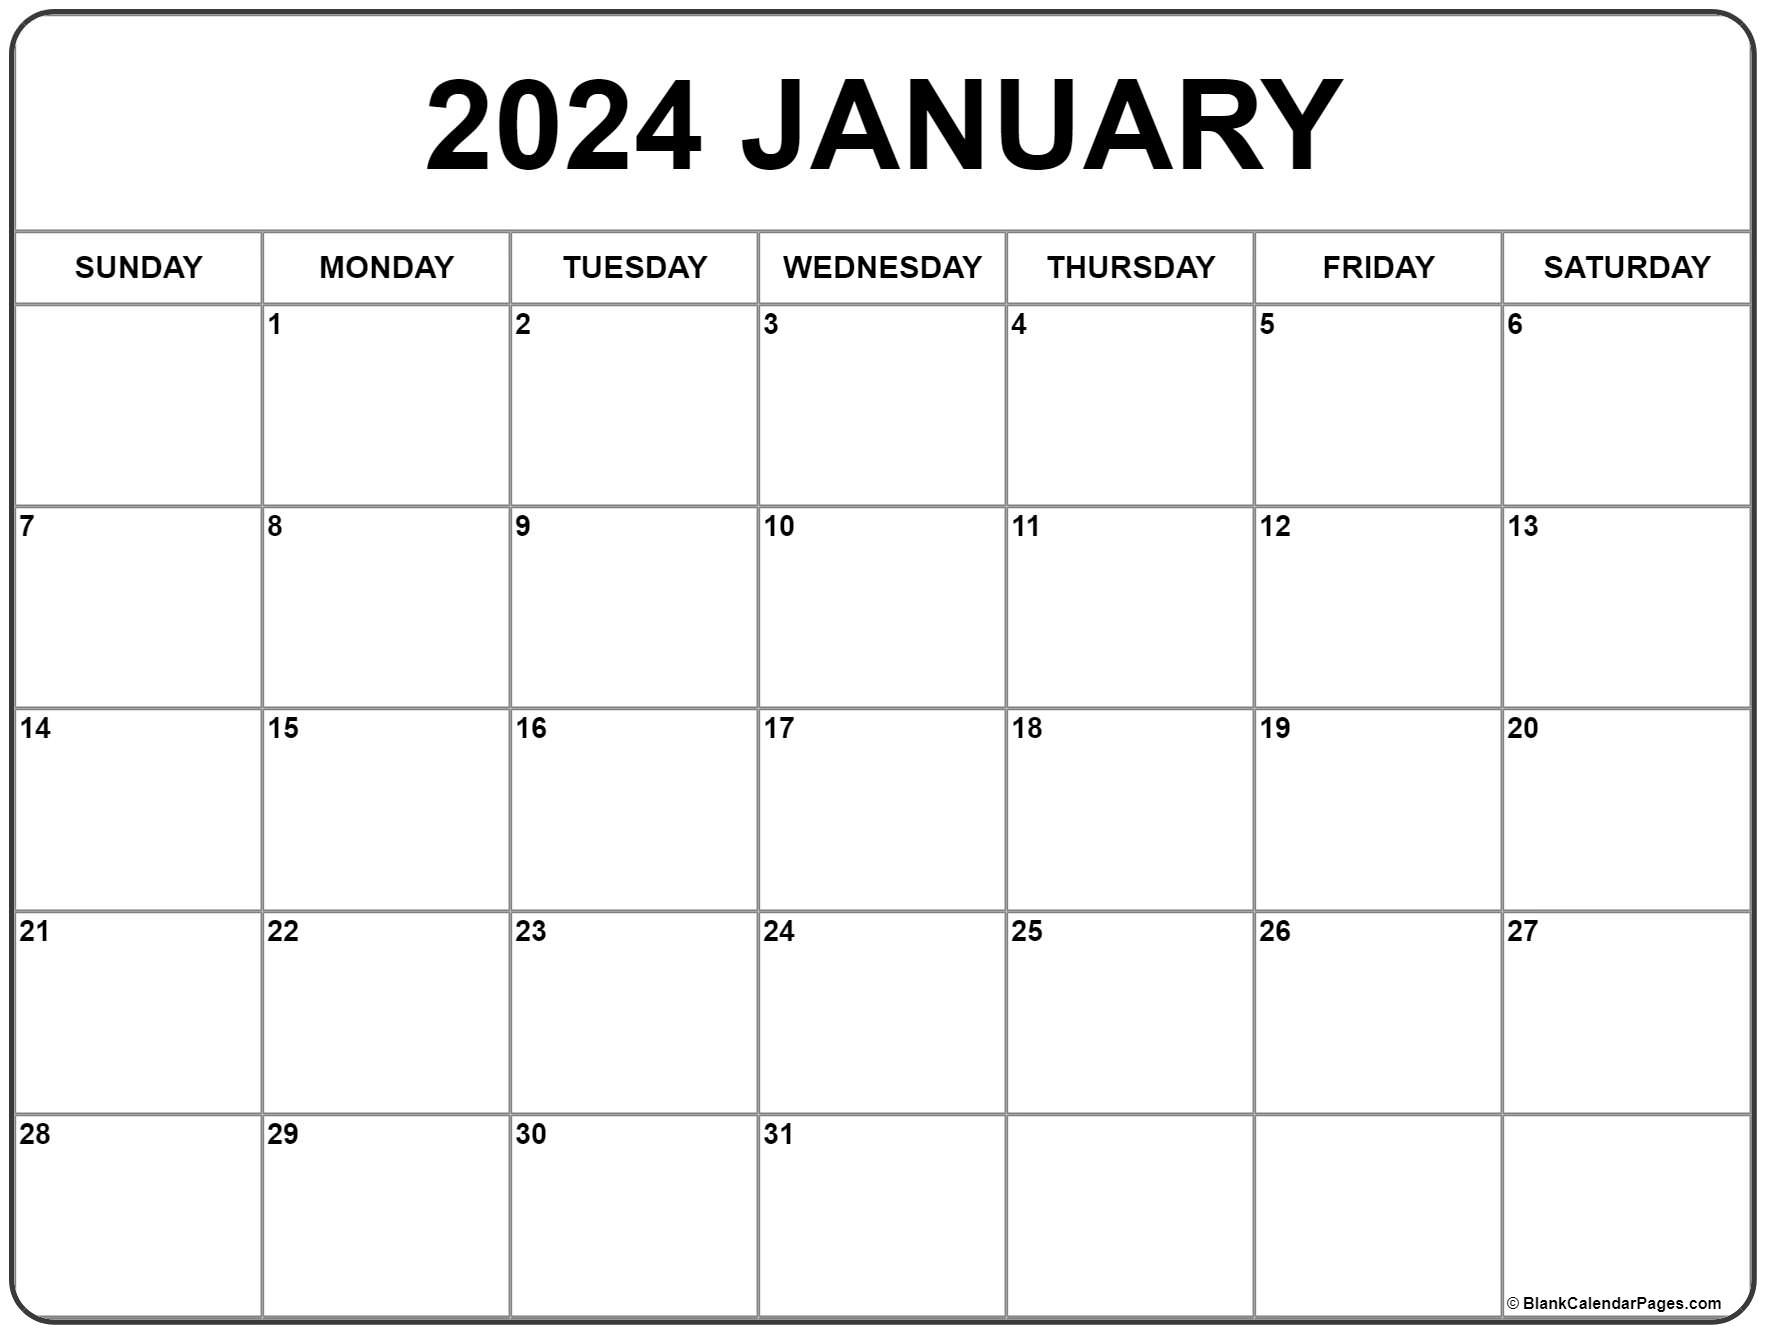 January 2024 Calendar | Free Printable Calendar for 2024 January Printable Calendar